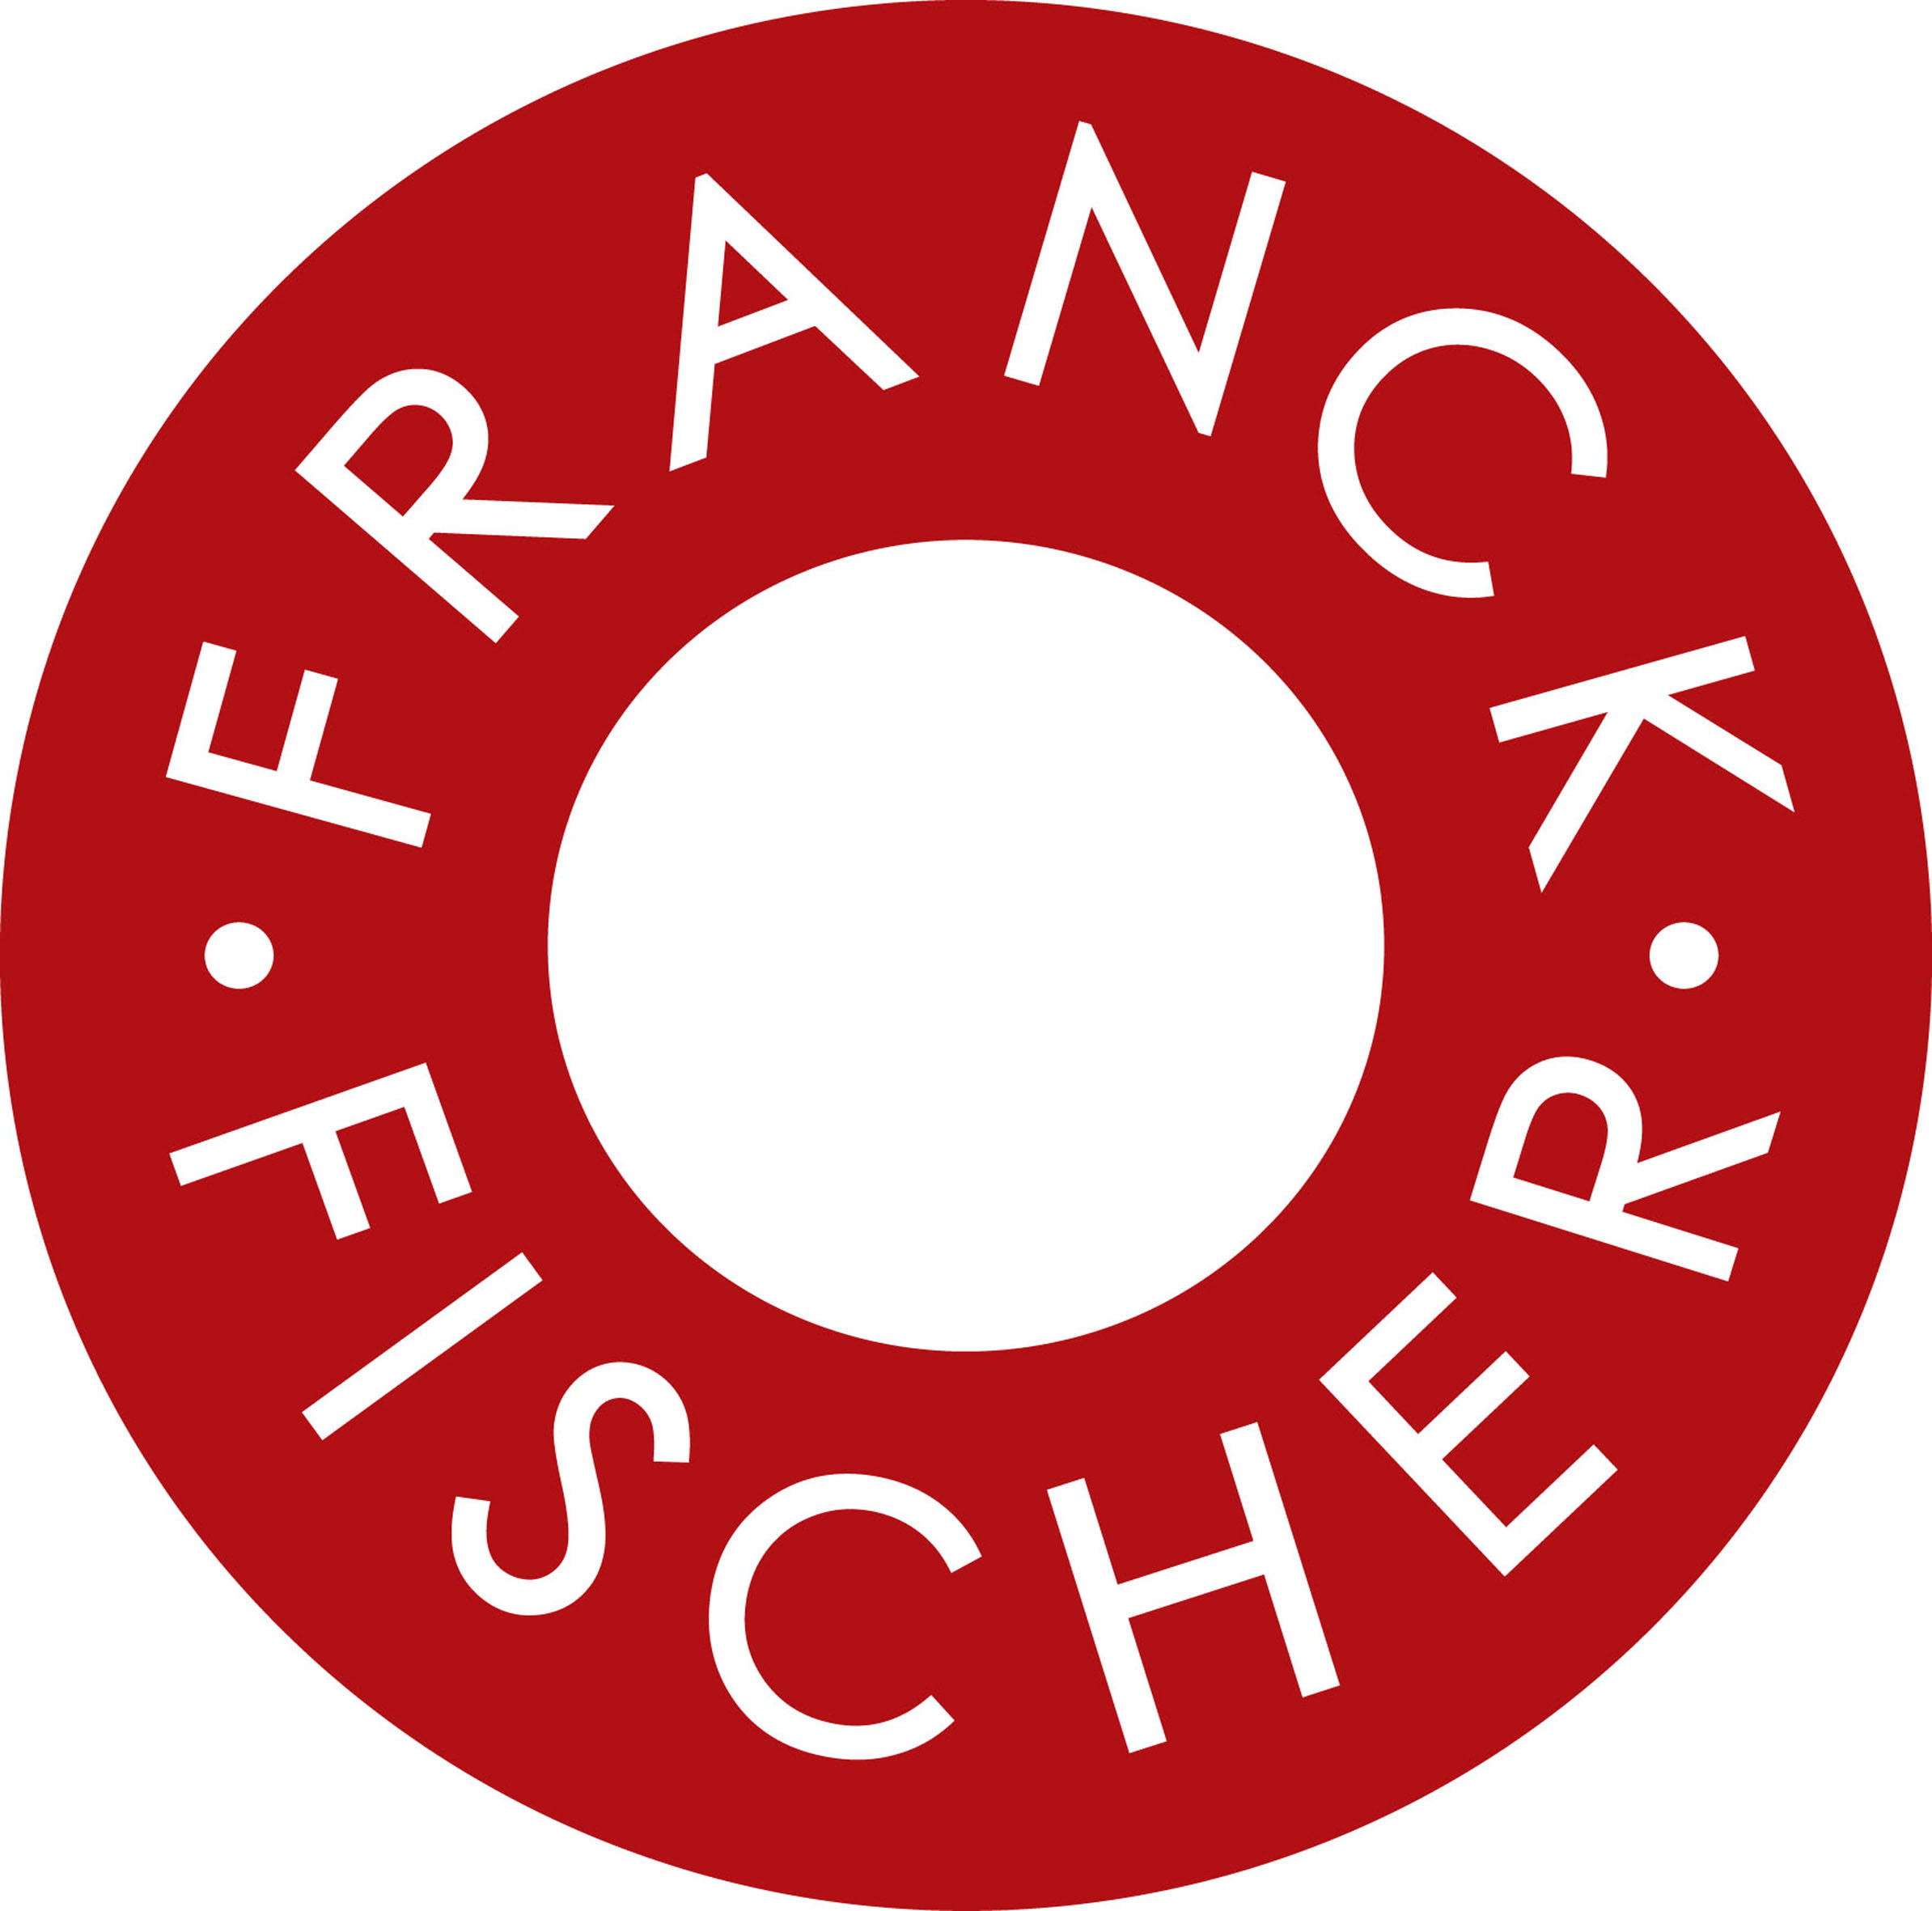 FRANCK & FISCHER logo 300 dpi